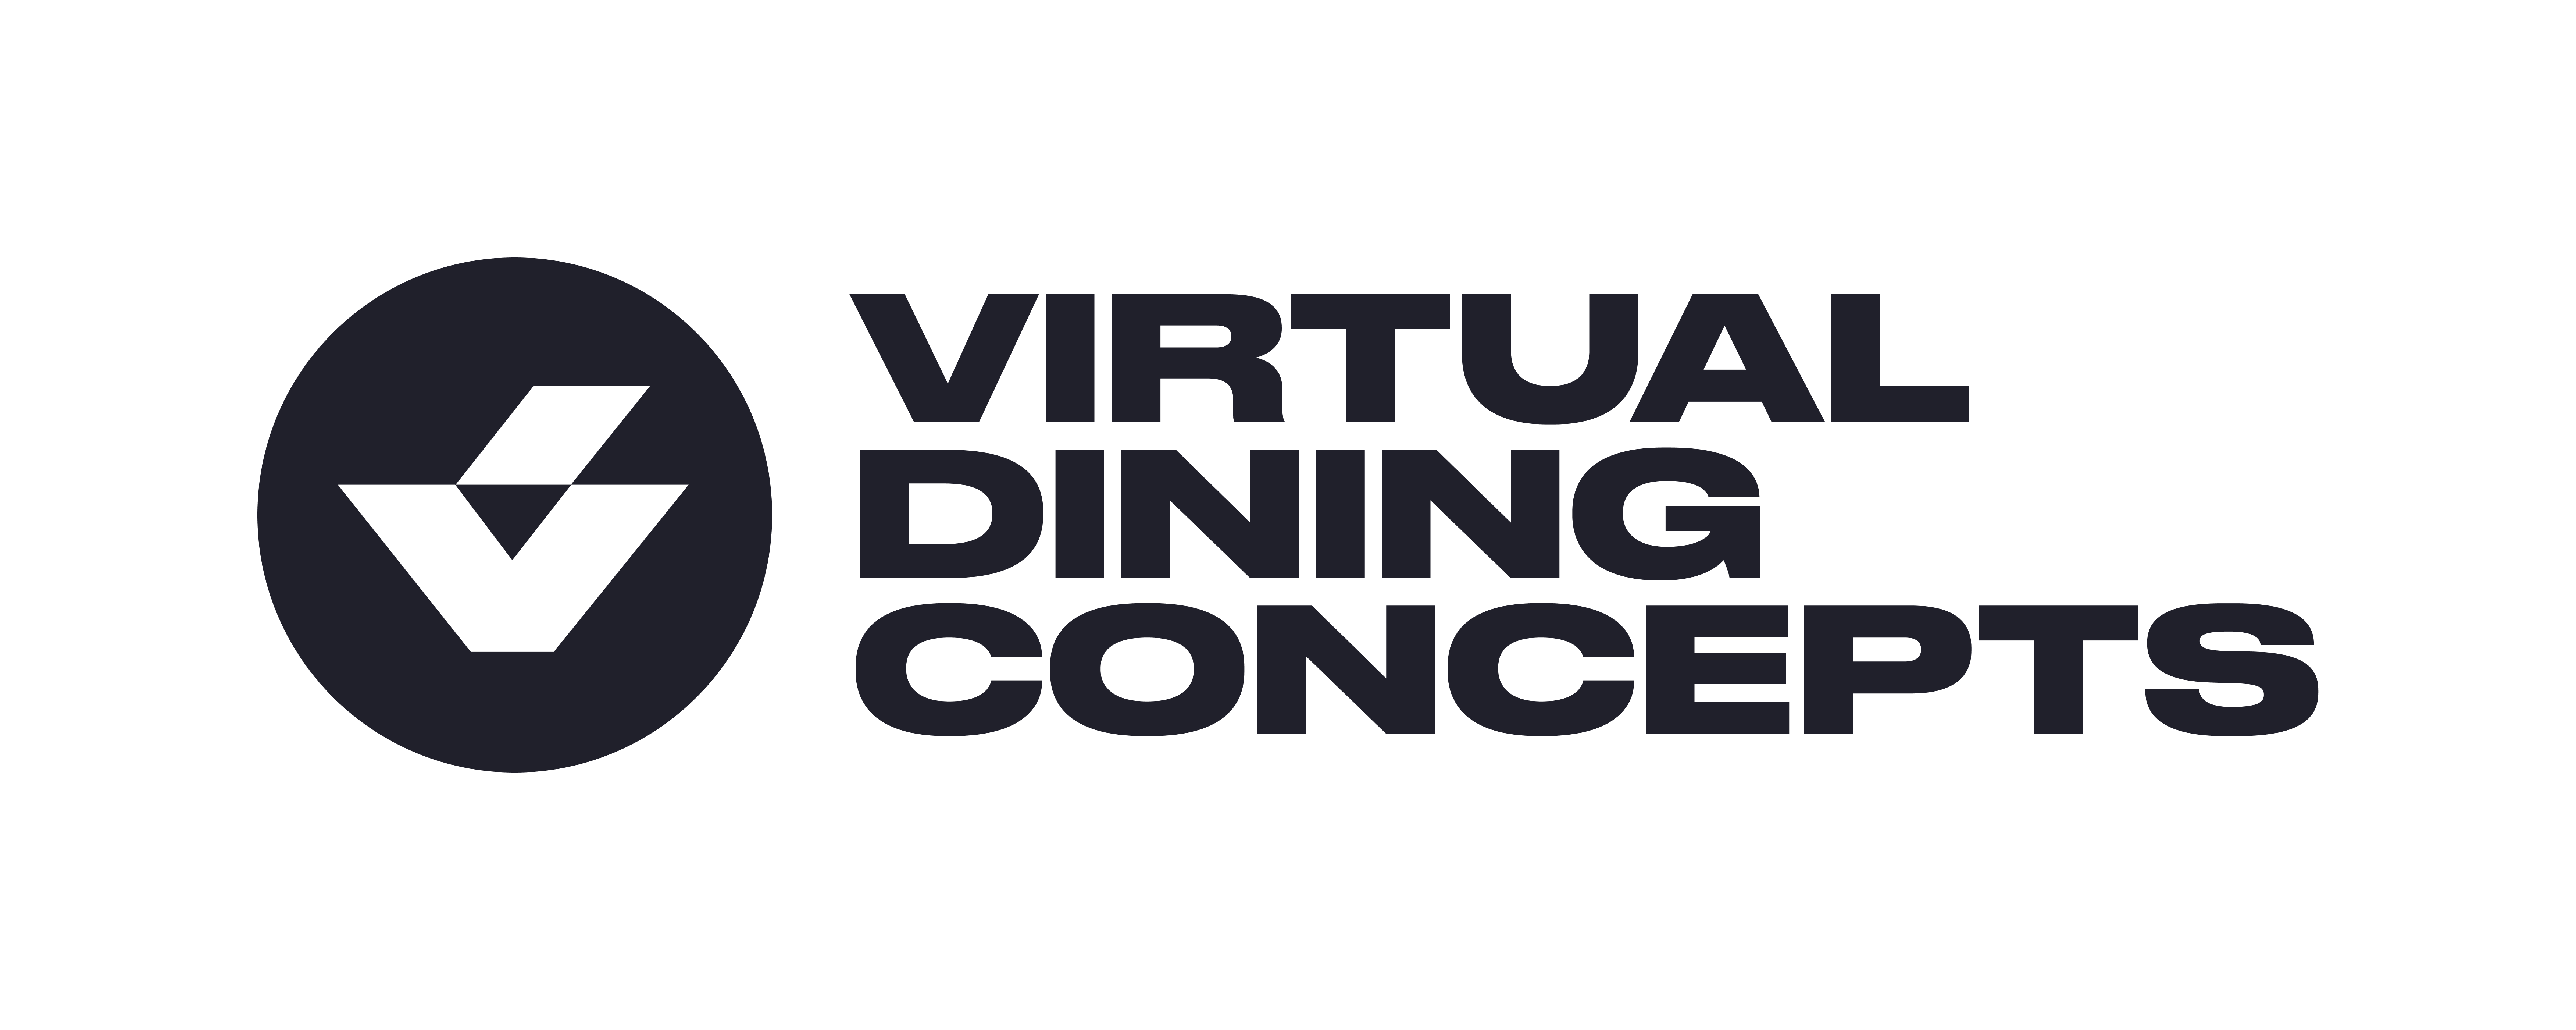 VDC Logo